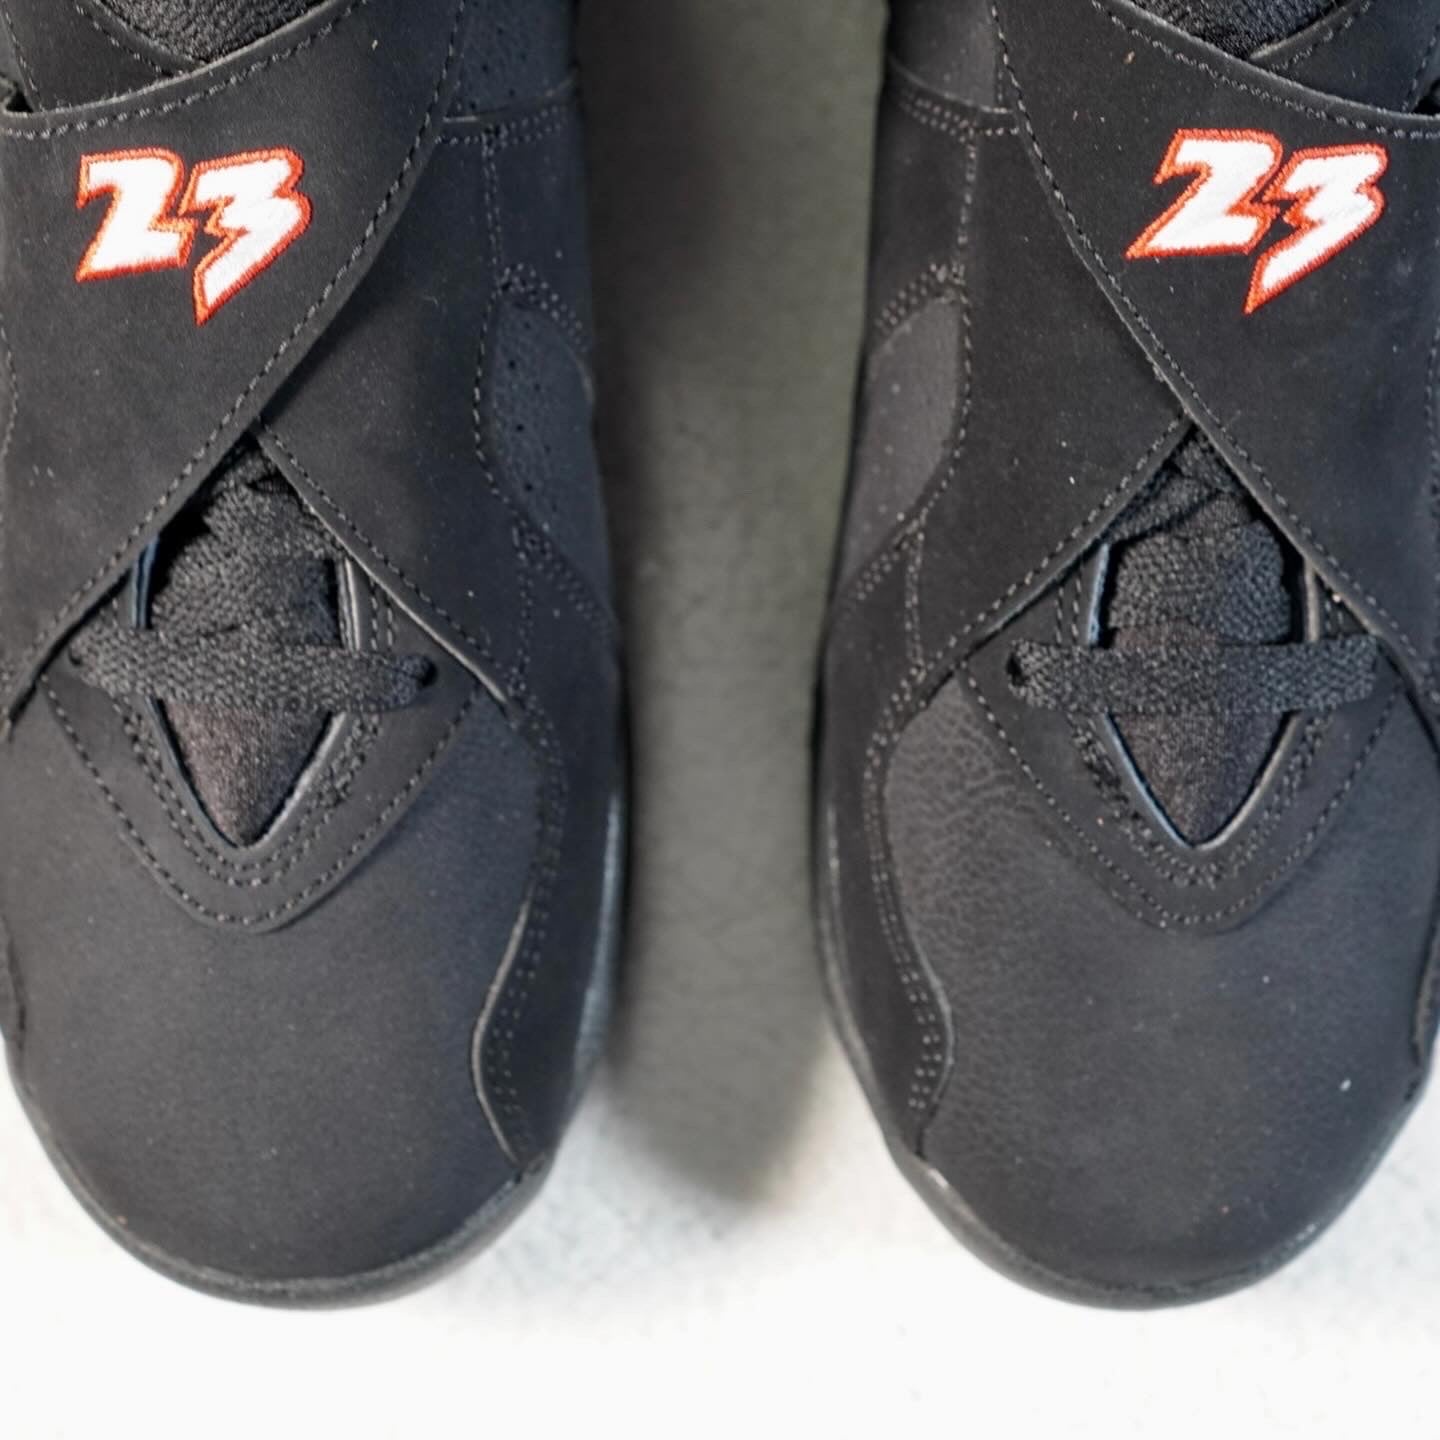 Sneakers Nike Air Jordan 8 Retro Playoffs